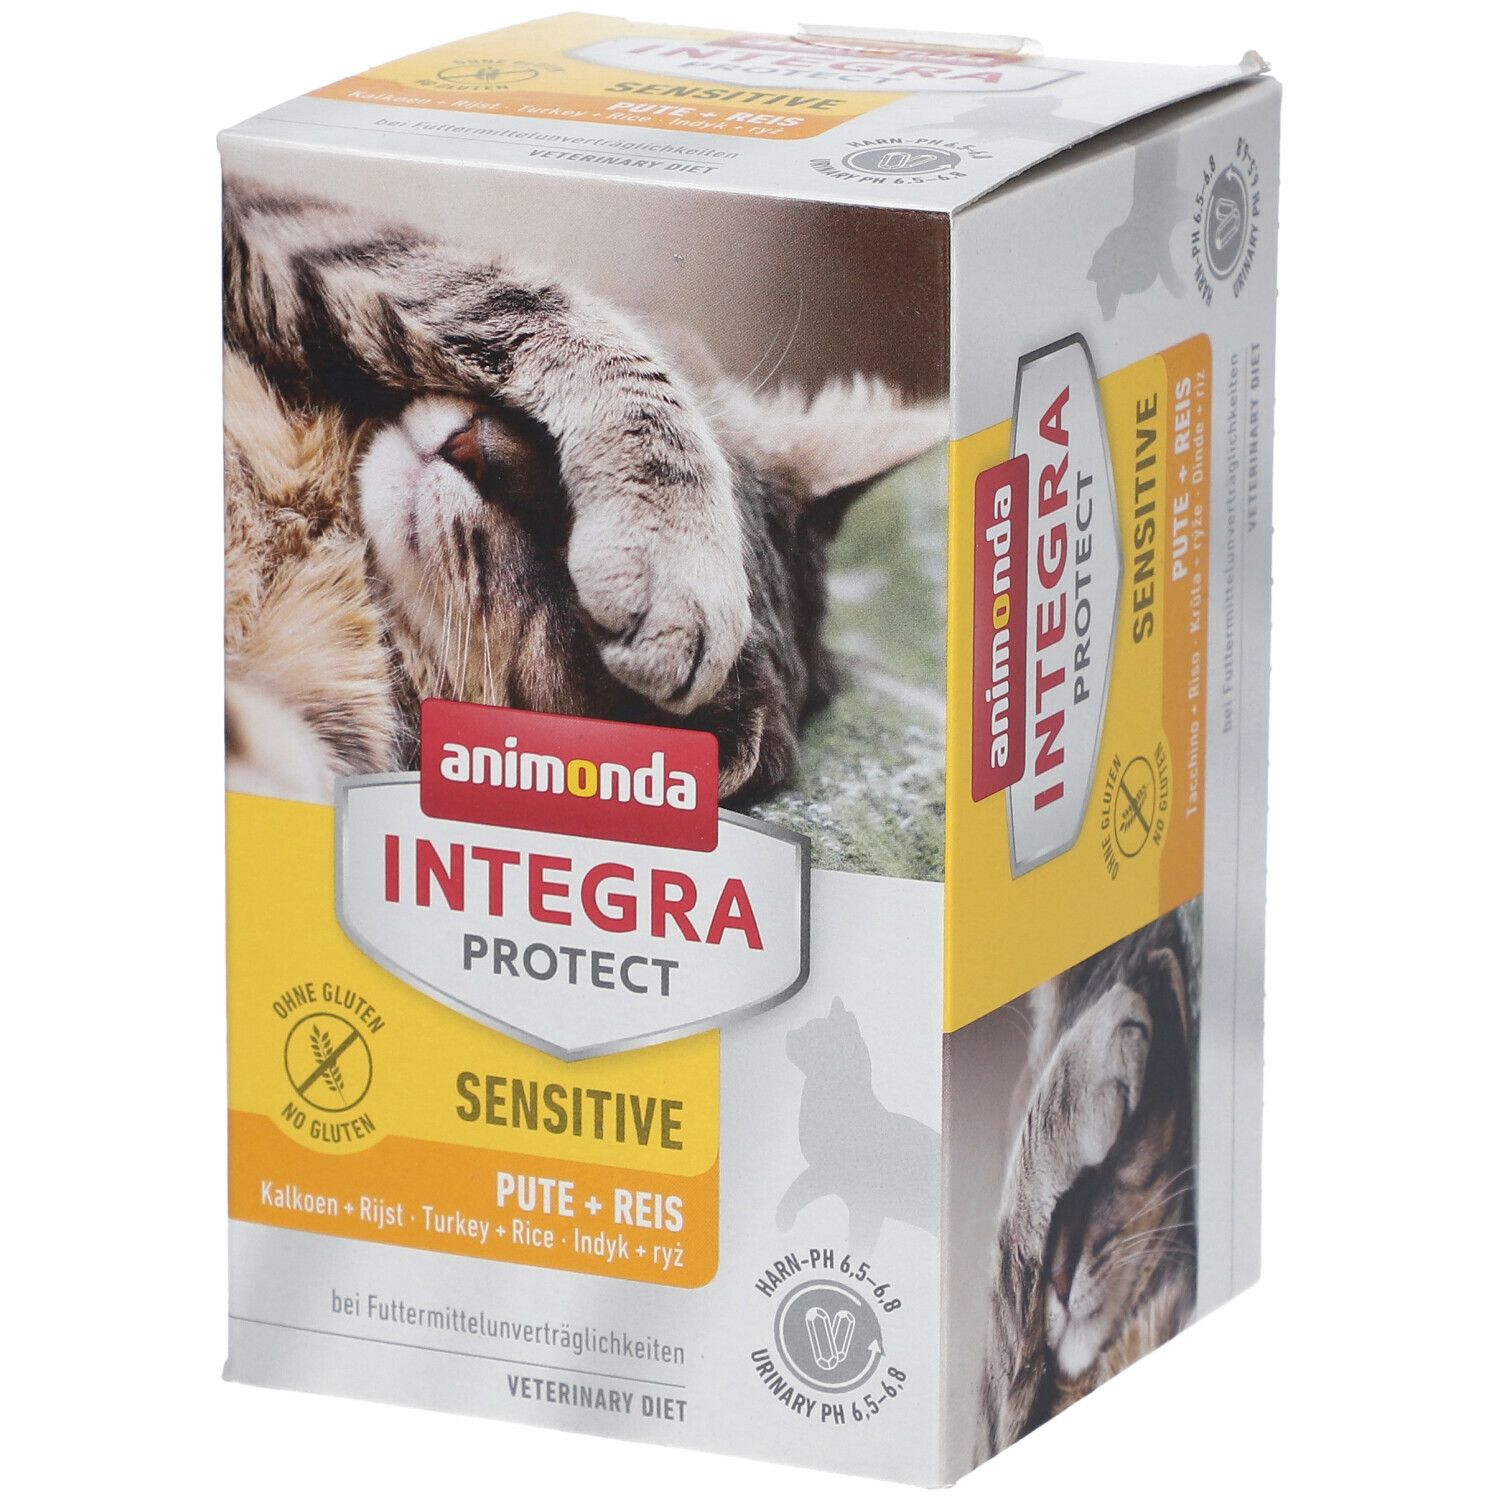 animonda Integra Protect Sensitive Pute + Reis